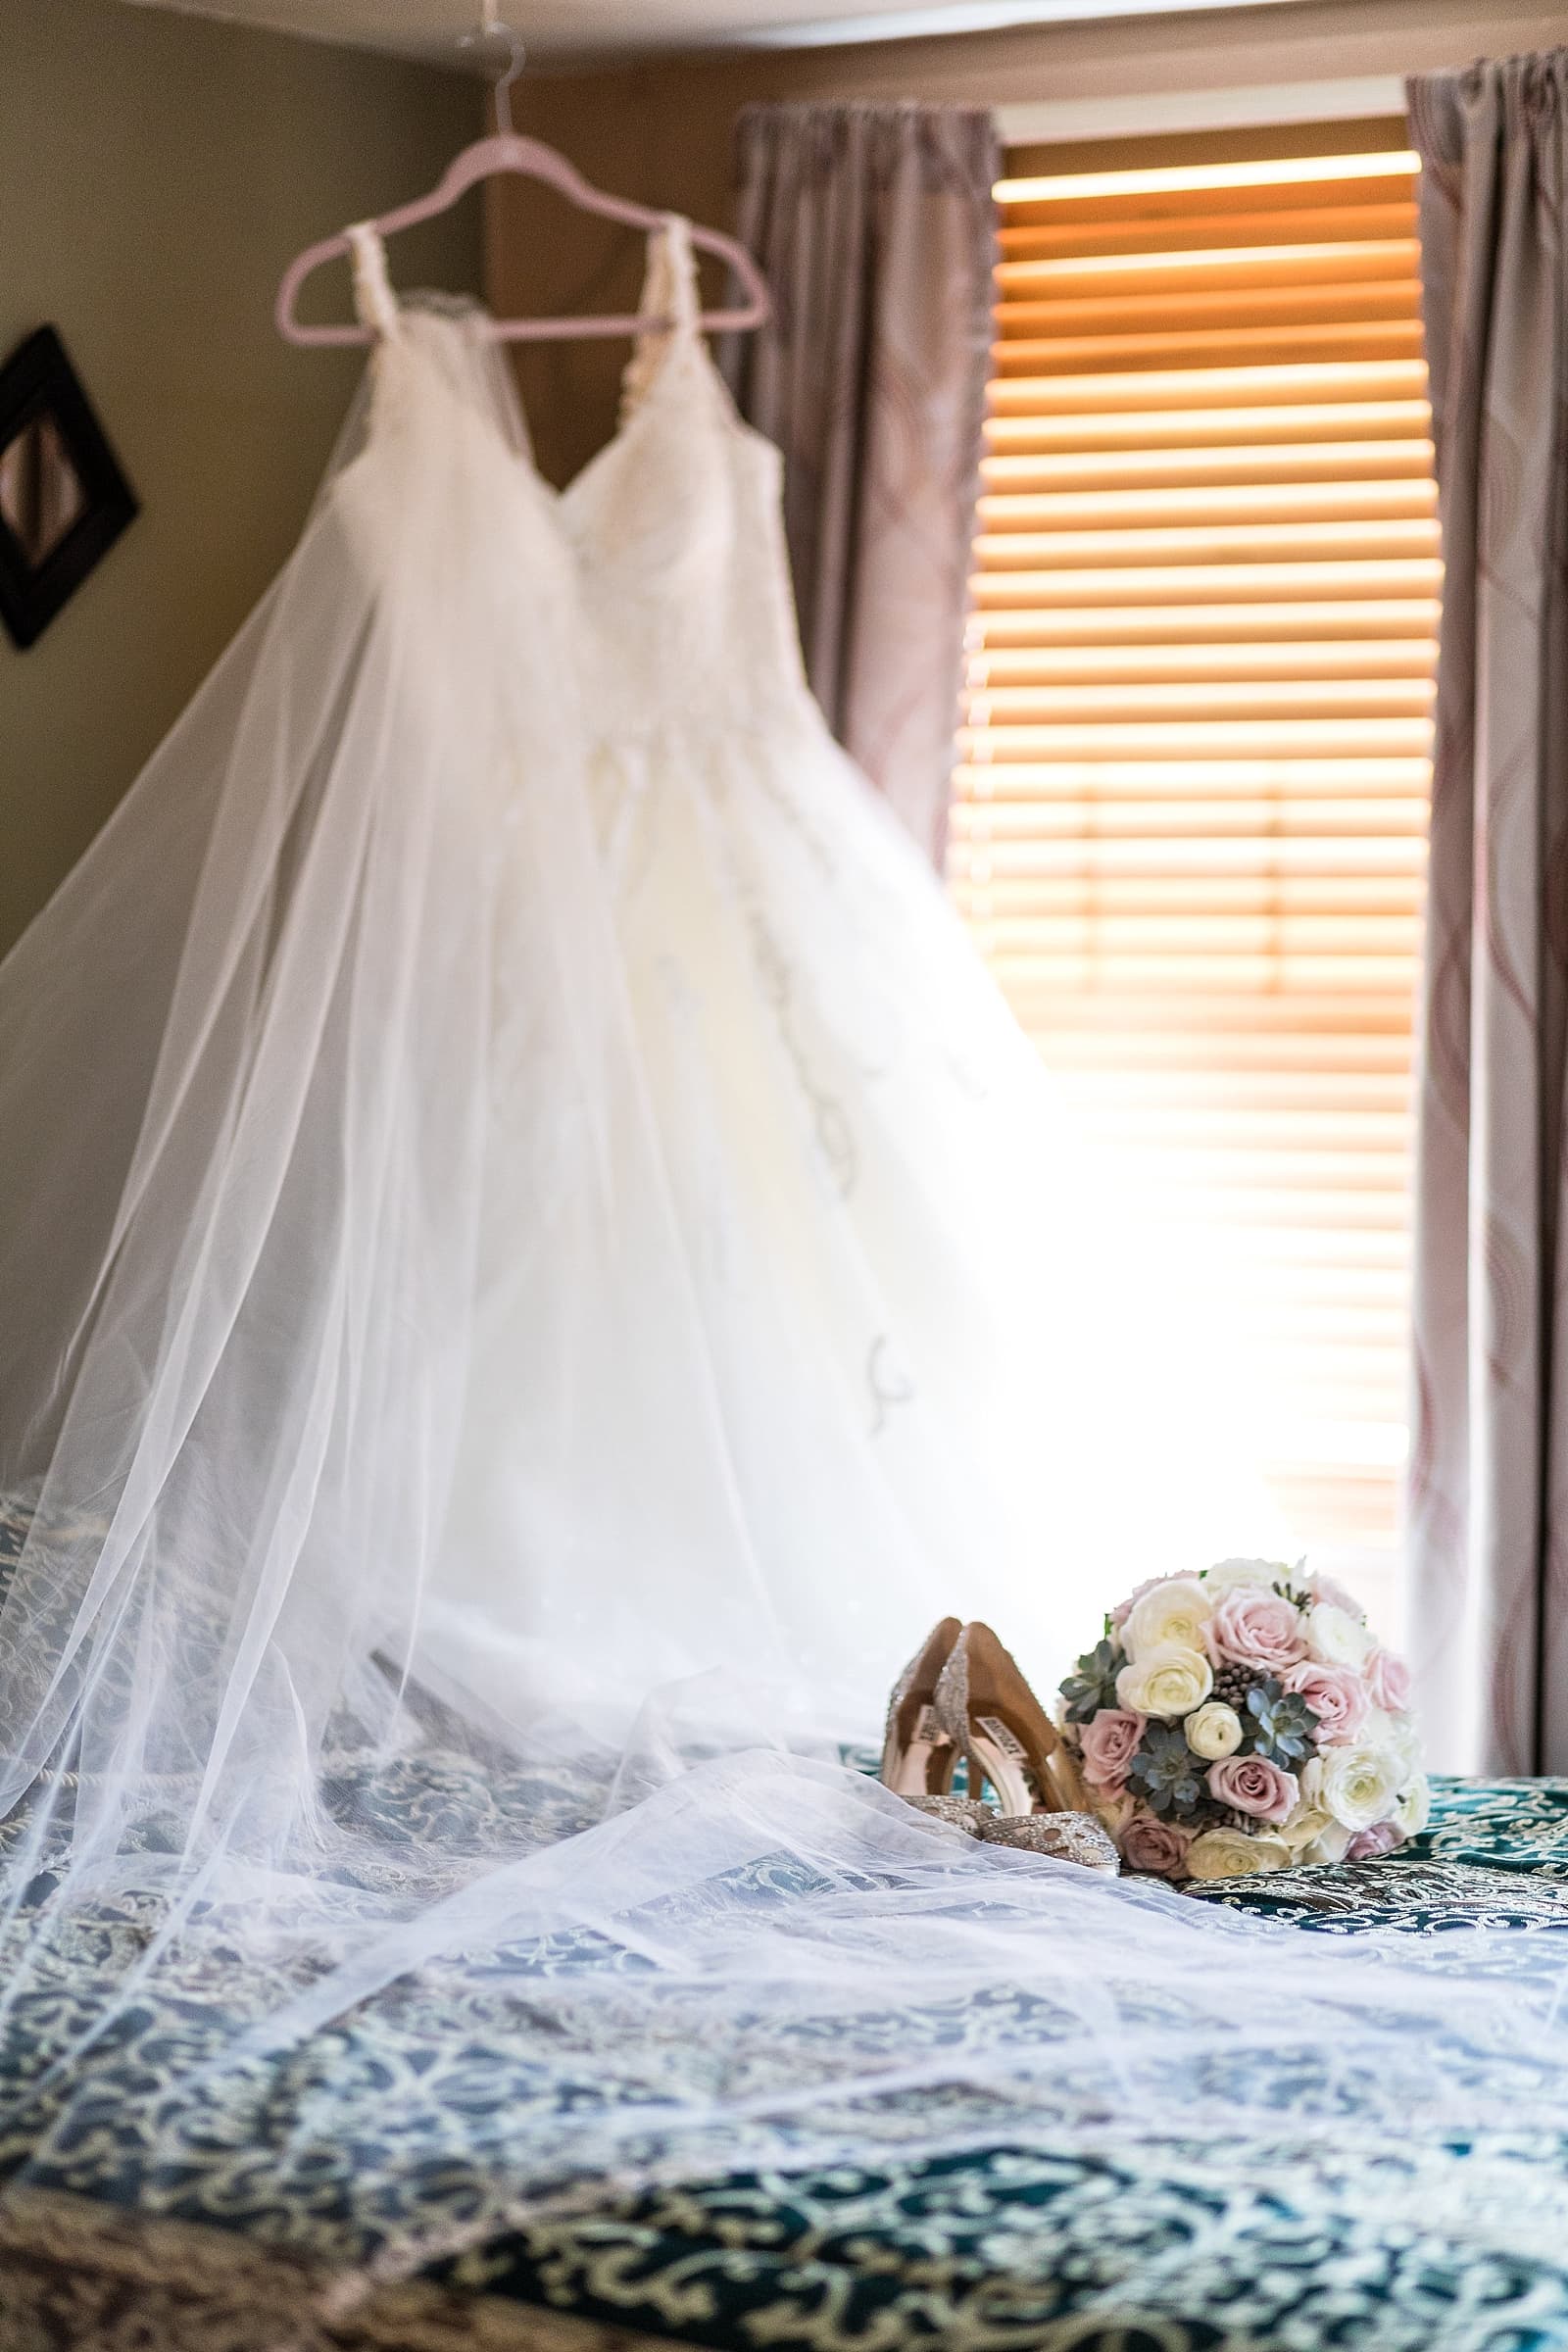 Hanging Martina Liana wedding gown in a bride's childhood bedroom.